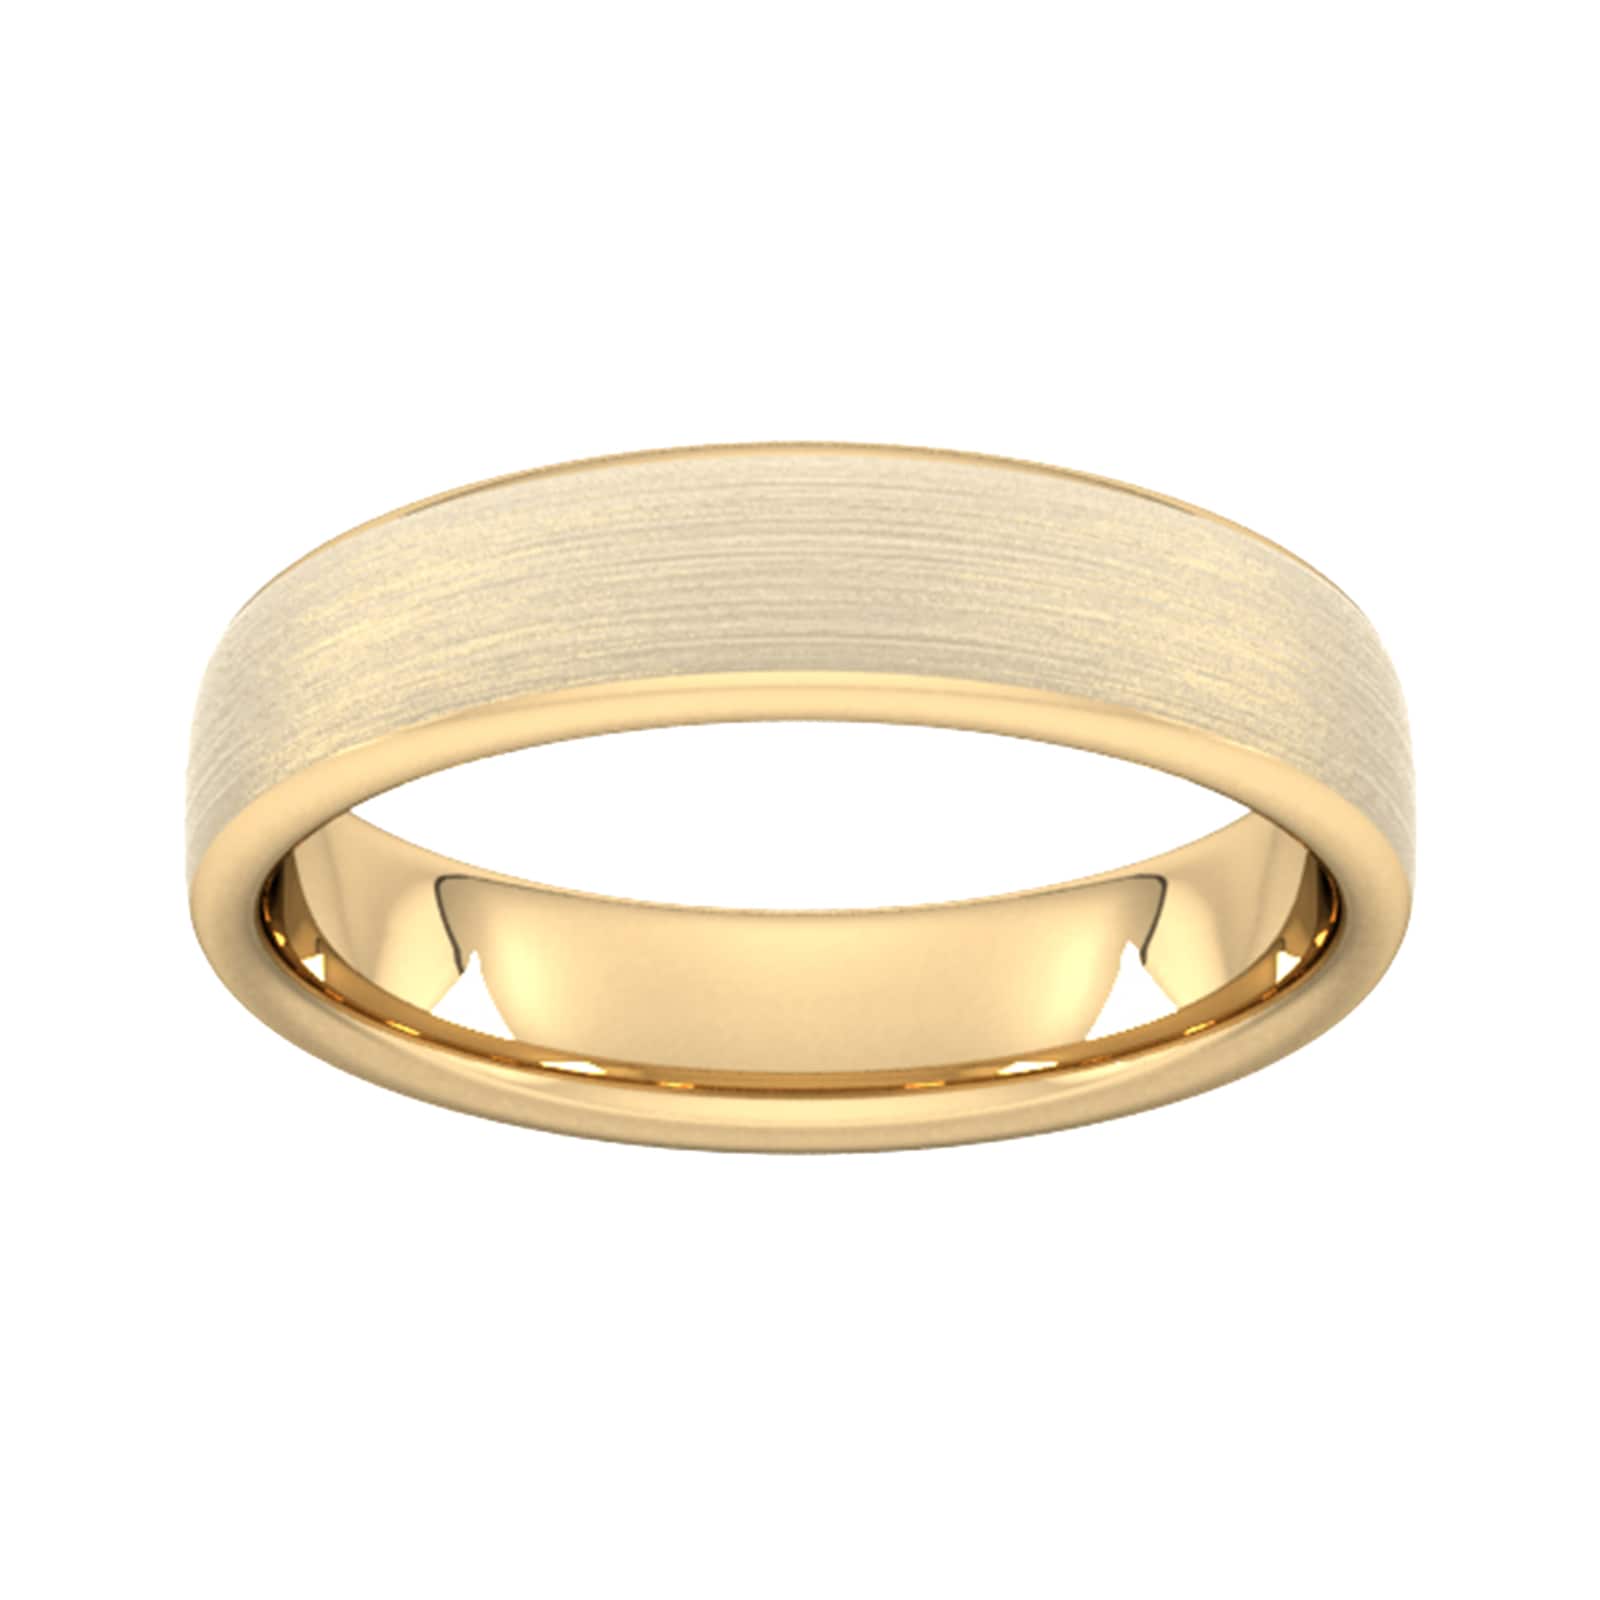 5mm D Shape Heavy Matt Finished Wedding Ring In 9 Carat Yellow Gold - Ring Size K